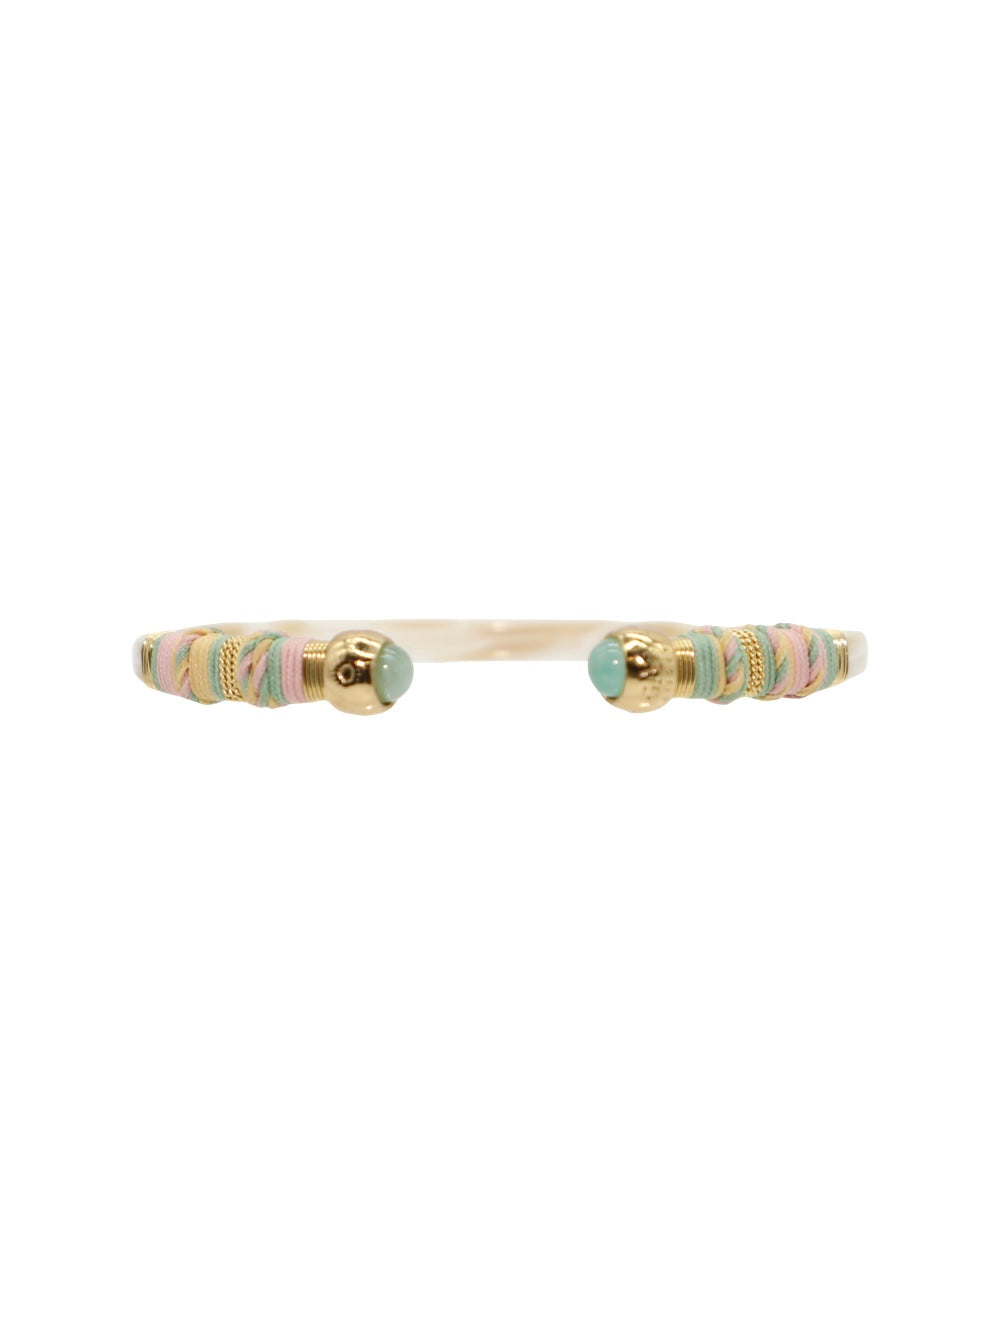 Gas Bijoux Sari Emballe Bracelet (More Colors)